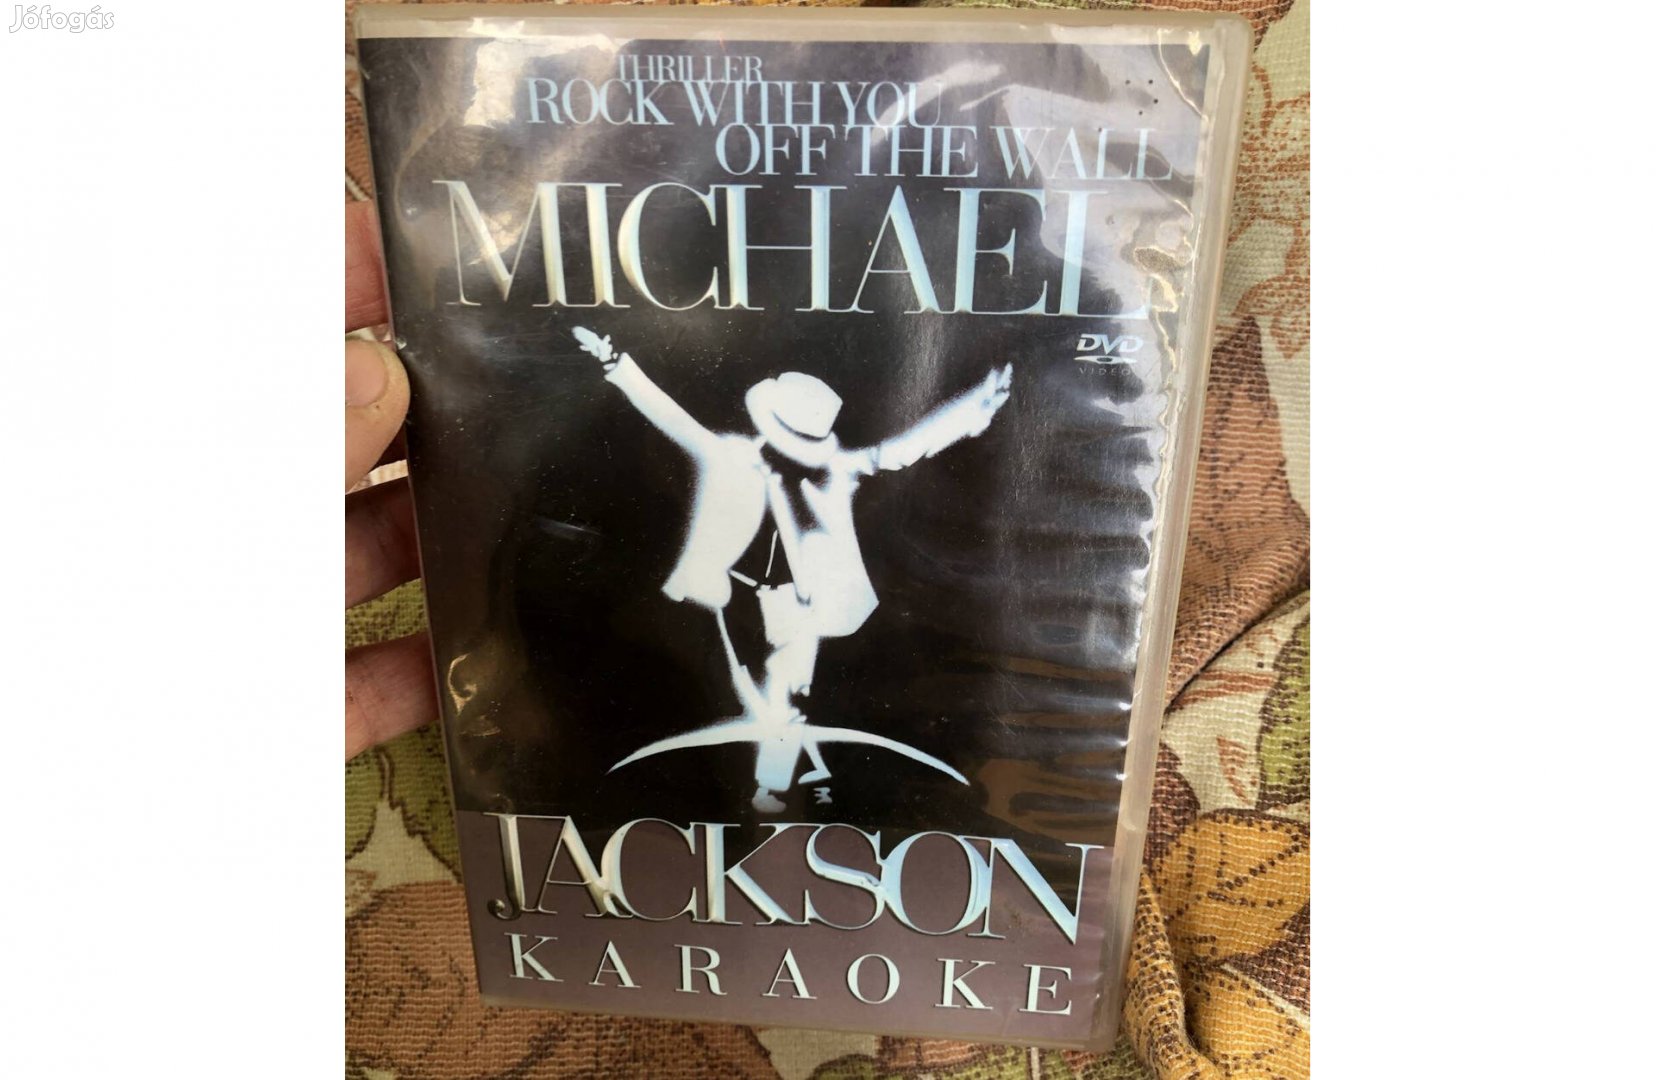 Michael Jackson-Karaoke Dvd 850 ft